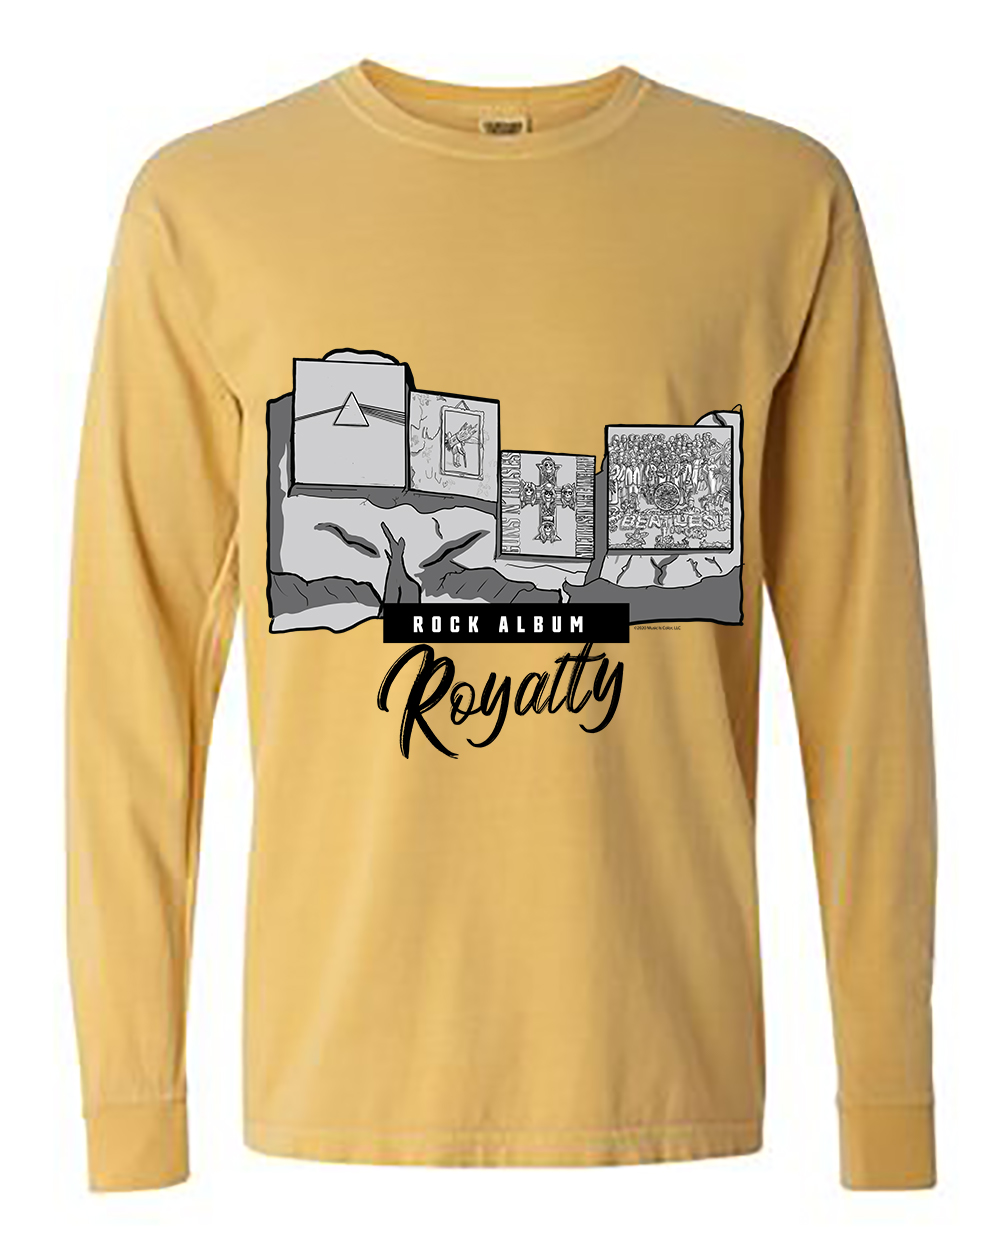 Mount Rushmore - Rock Album Royalty (Gold Long Sleeve Shirt)